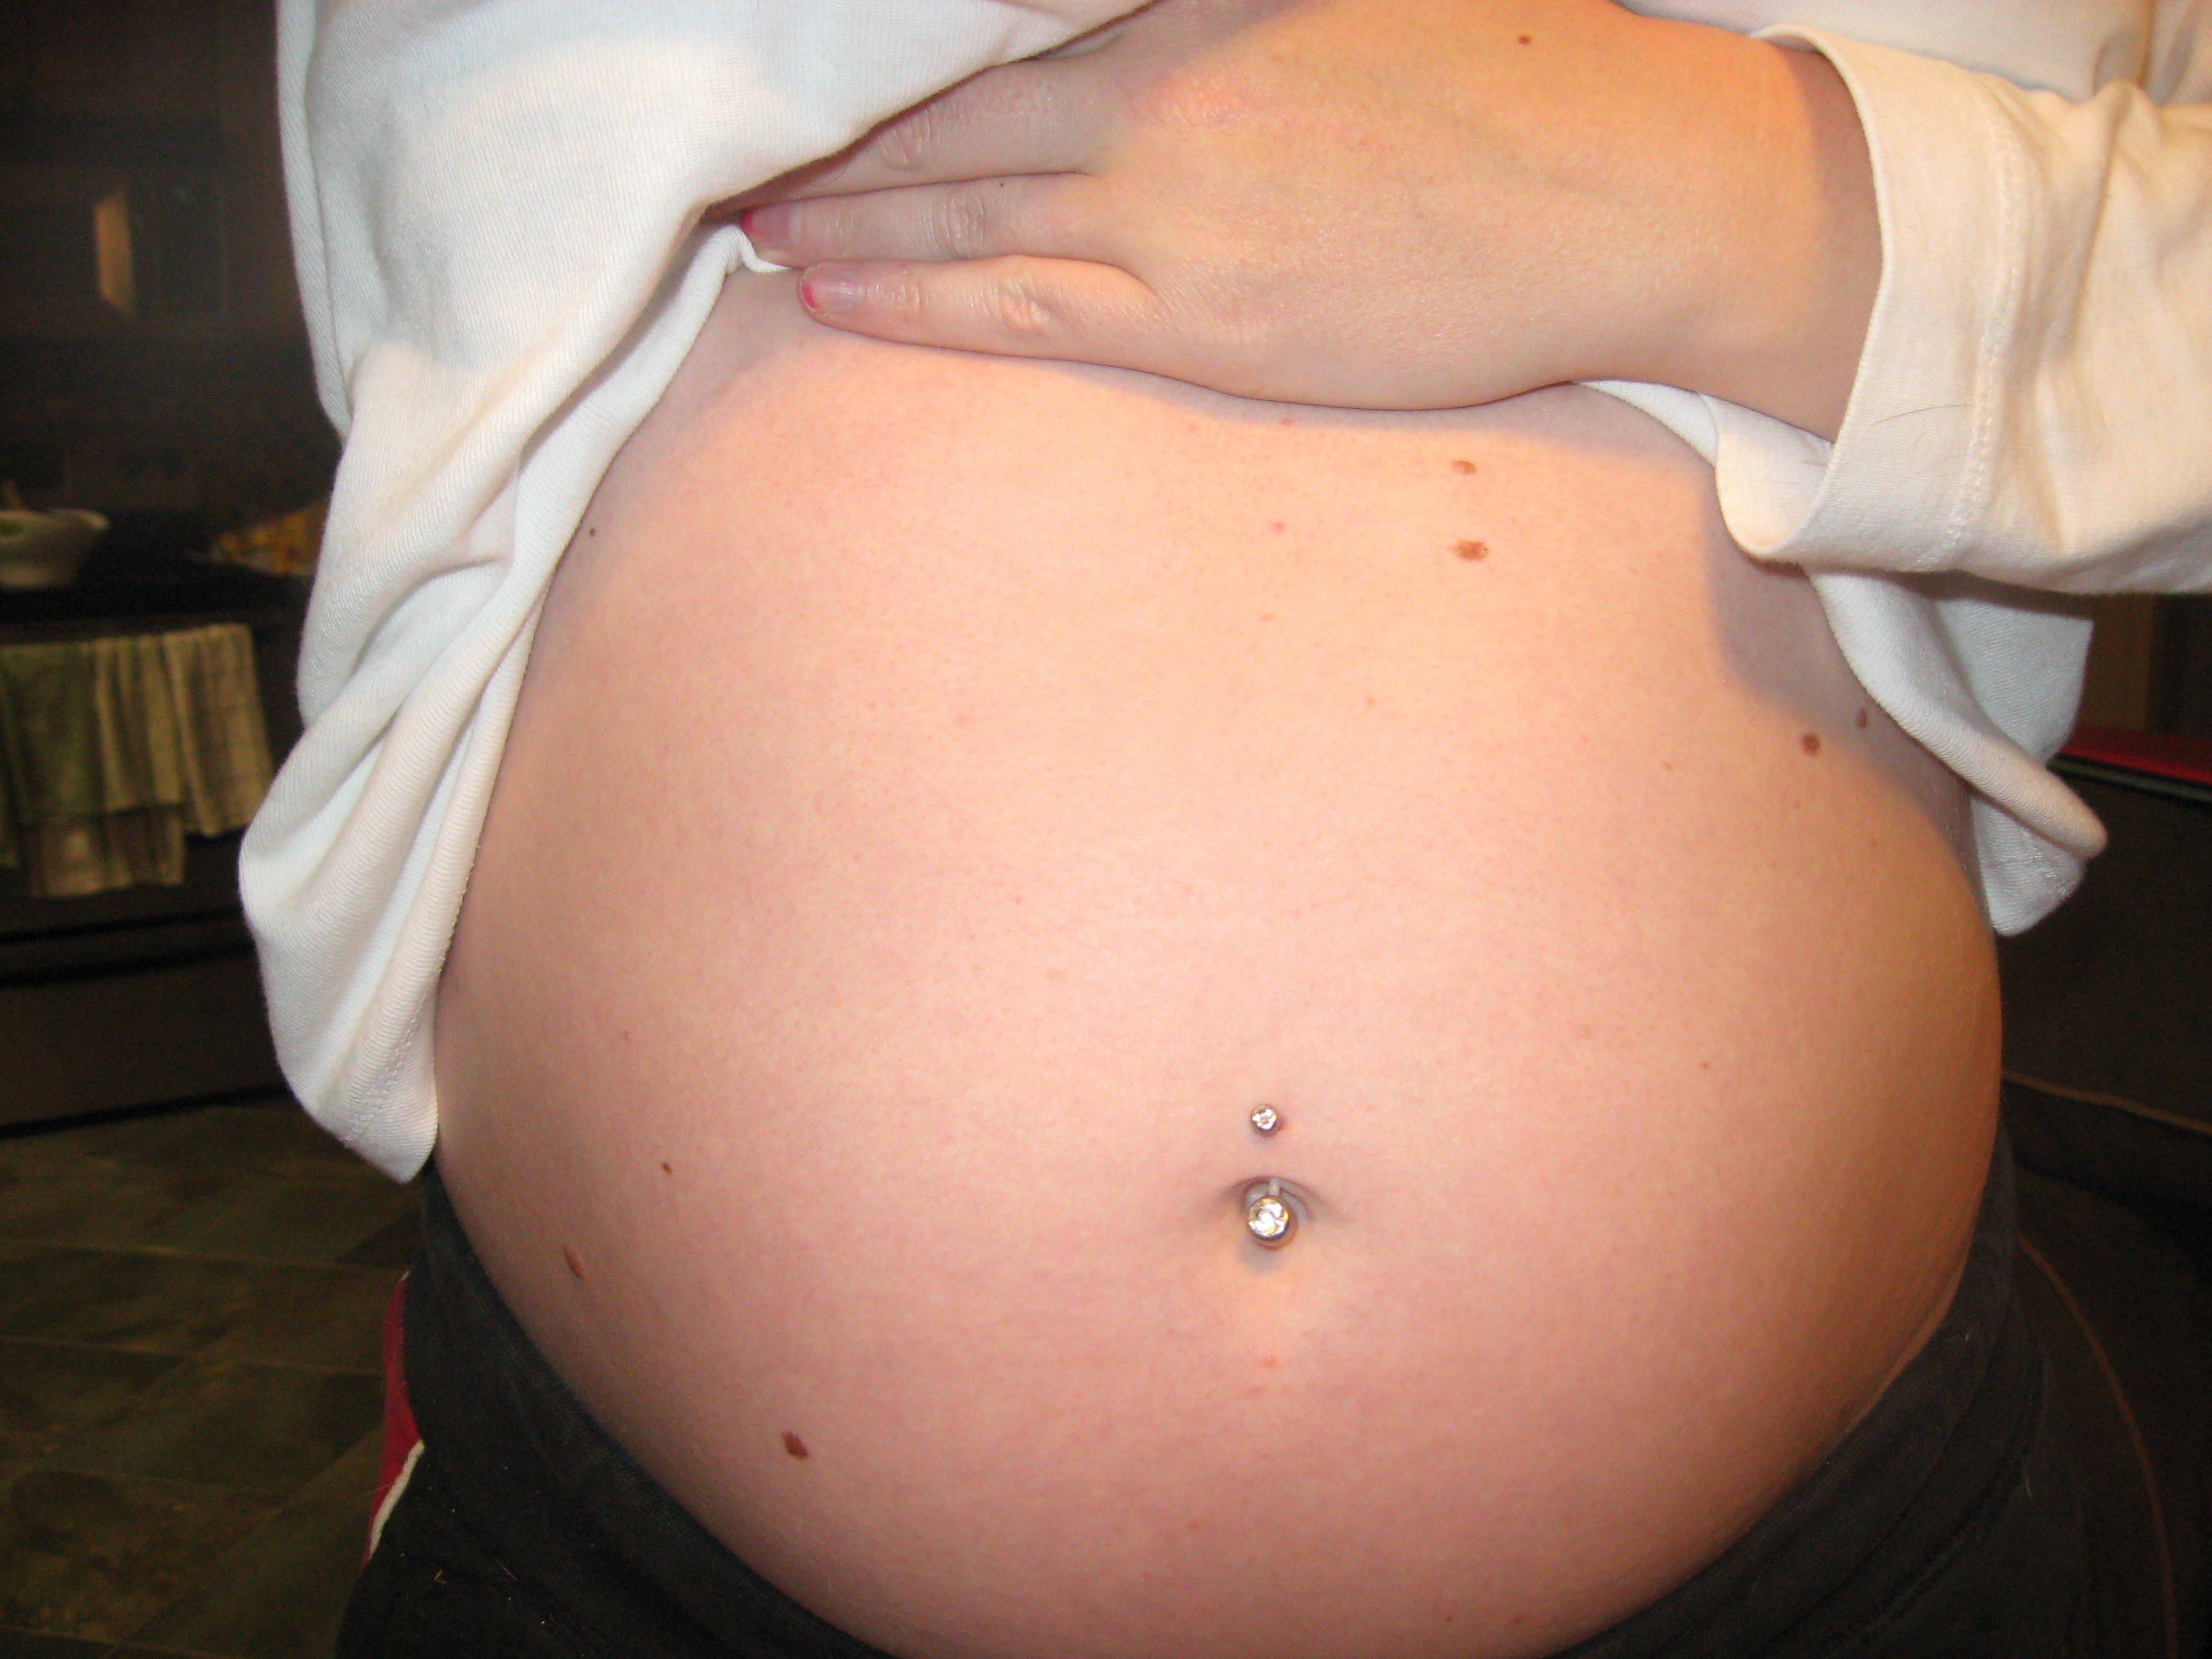 Тату, увеличение груди и пирсинг пупка при беременности · всё о беременности, родах, развитии ребенка, а также воспитании и уходе за ним на babyzzz.ru